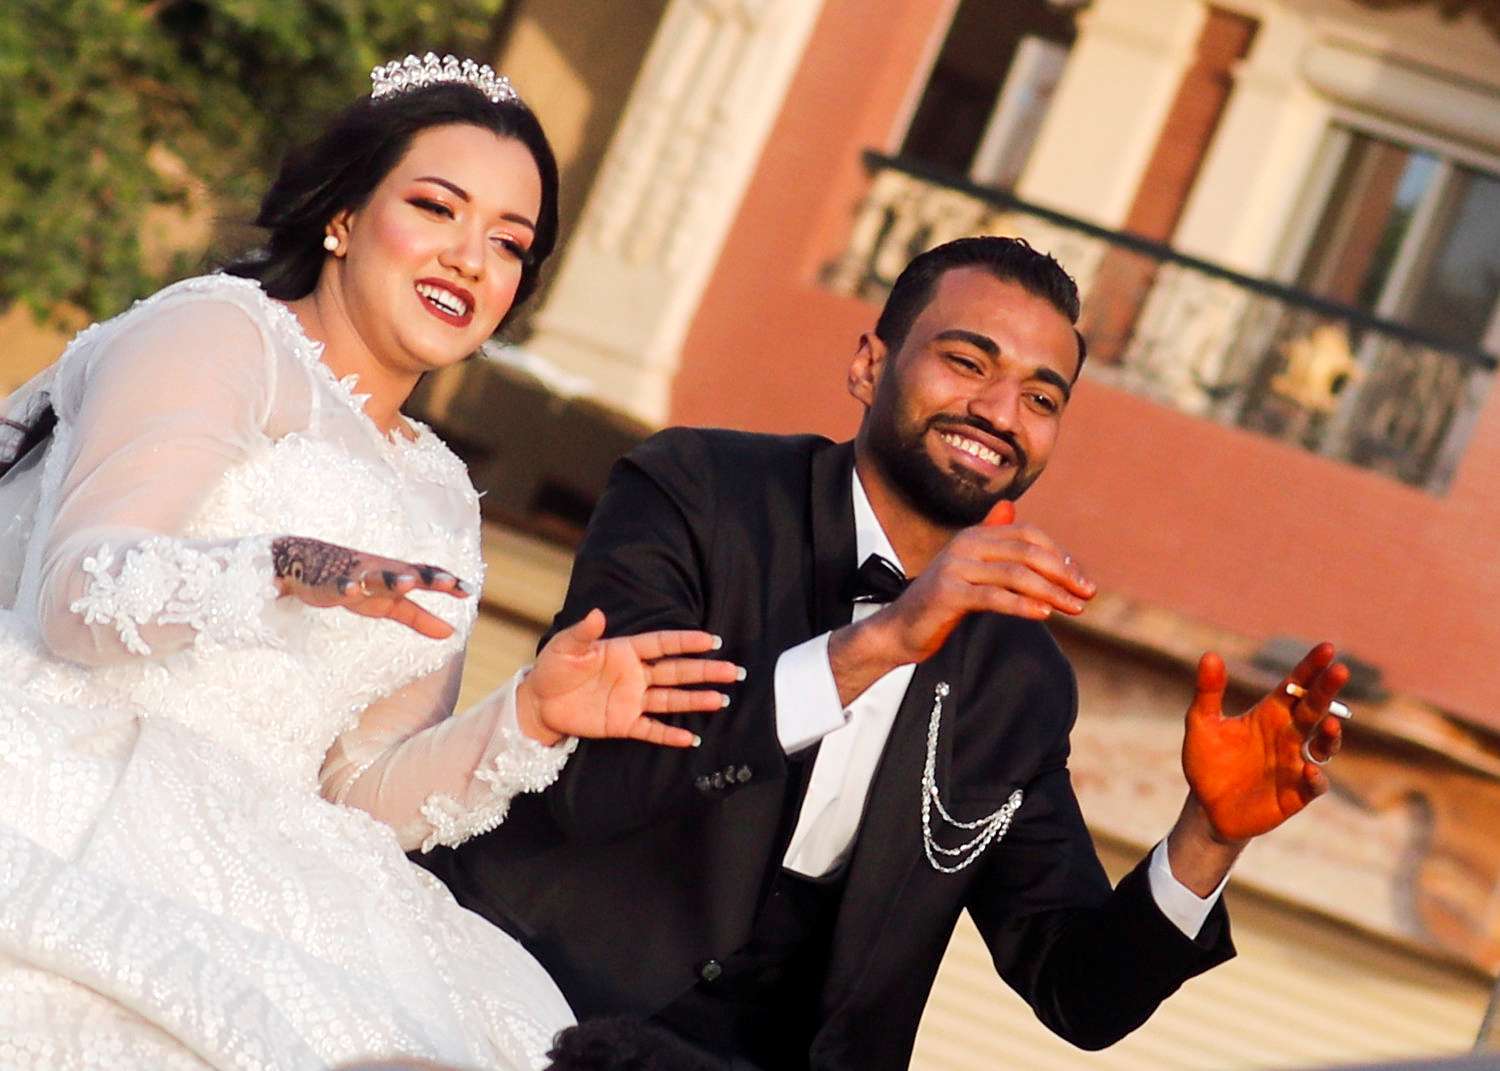 عروس وعريس مصري يحتفلان بزفافهما في نيسان 2020 قبل بدء حظر كورونا